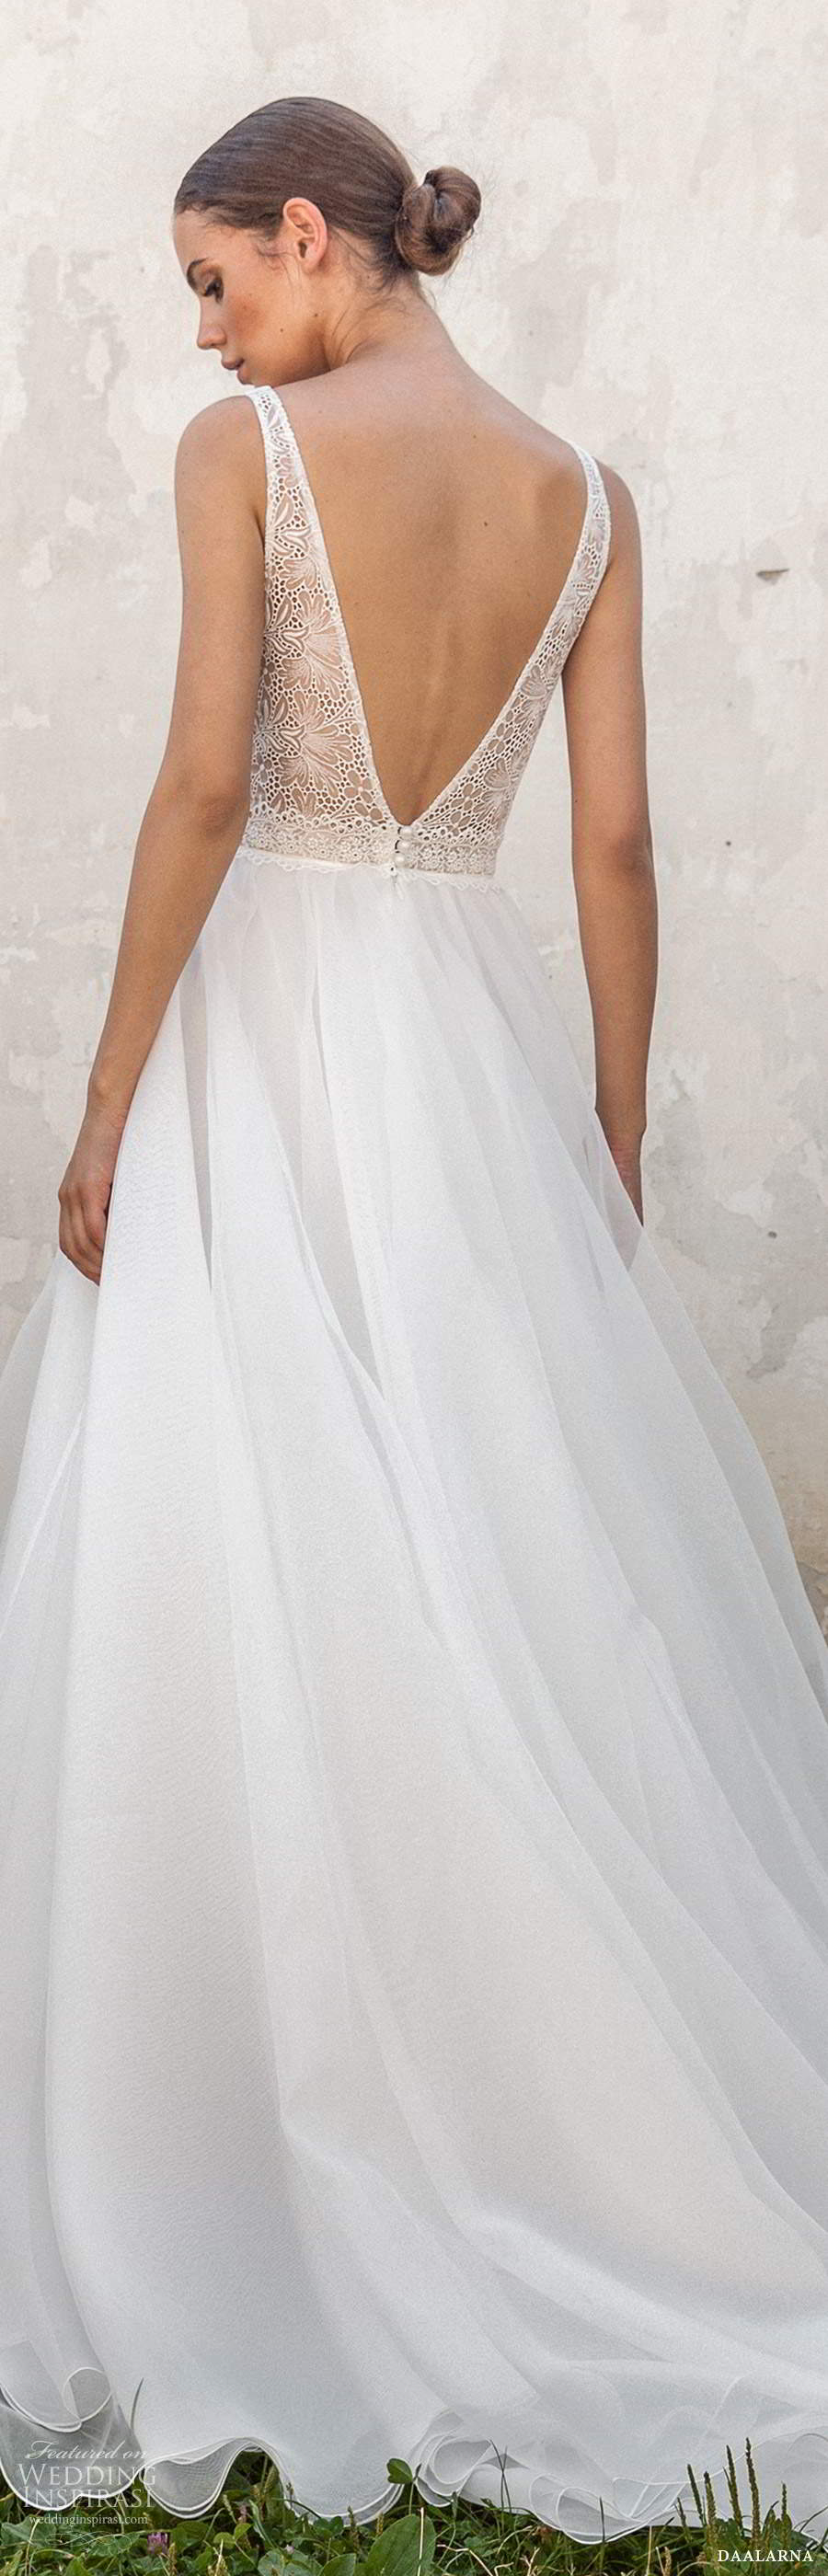 daalarna fall 2020 bridal sleeveless straps v neckline embellished bodice a line ball gown wedding dress chapel train (22) bv